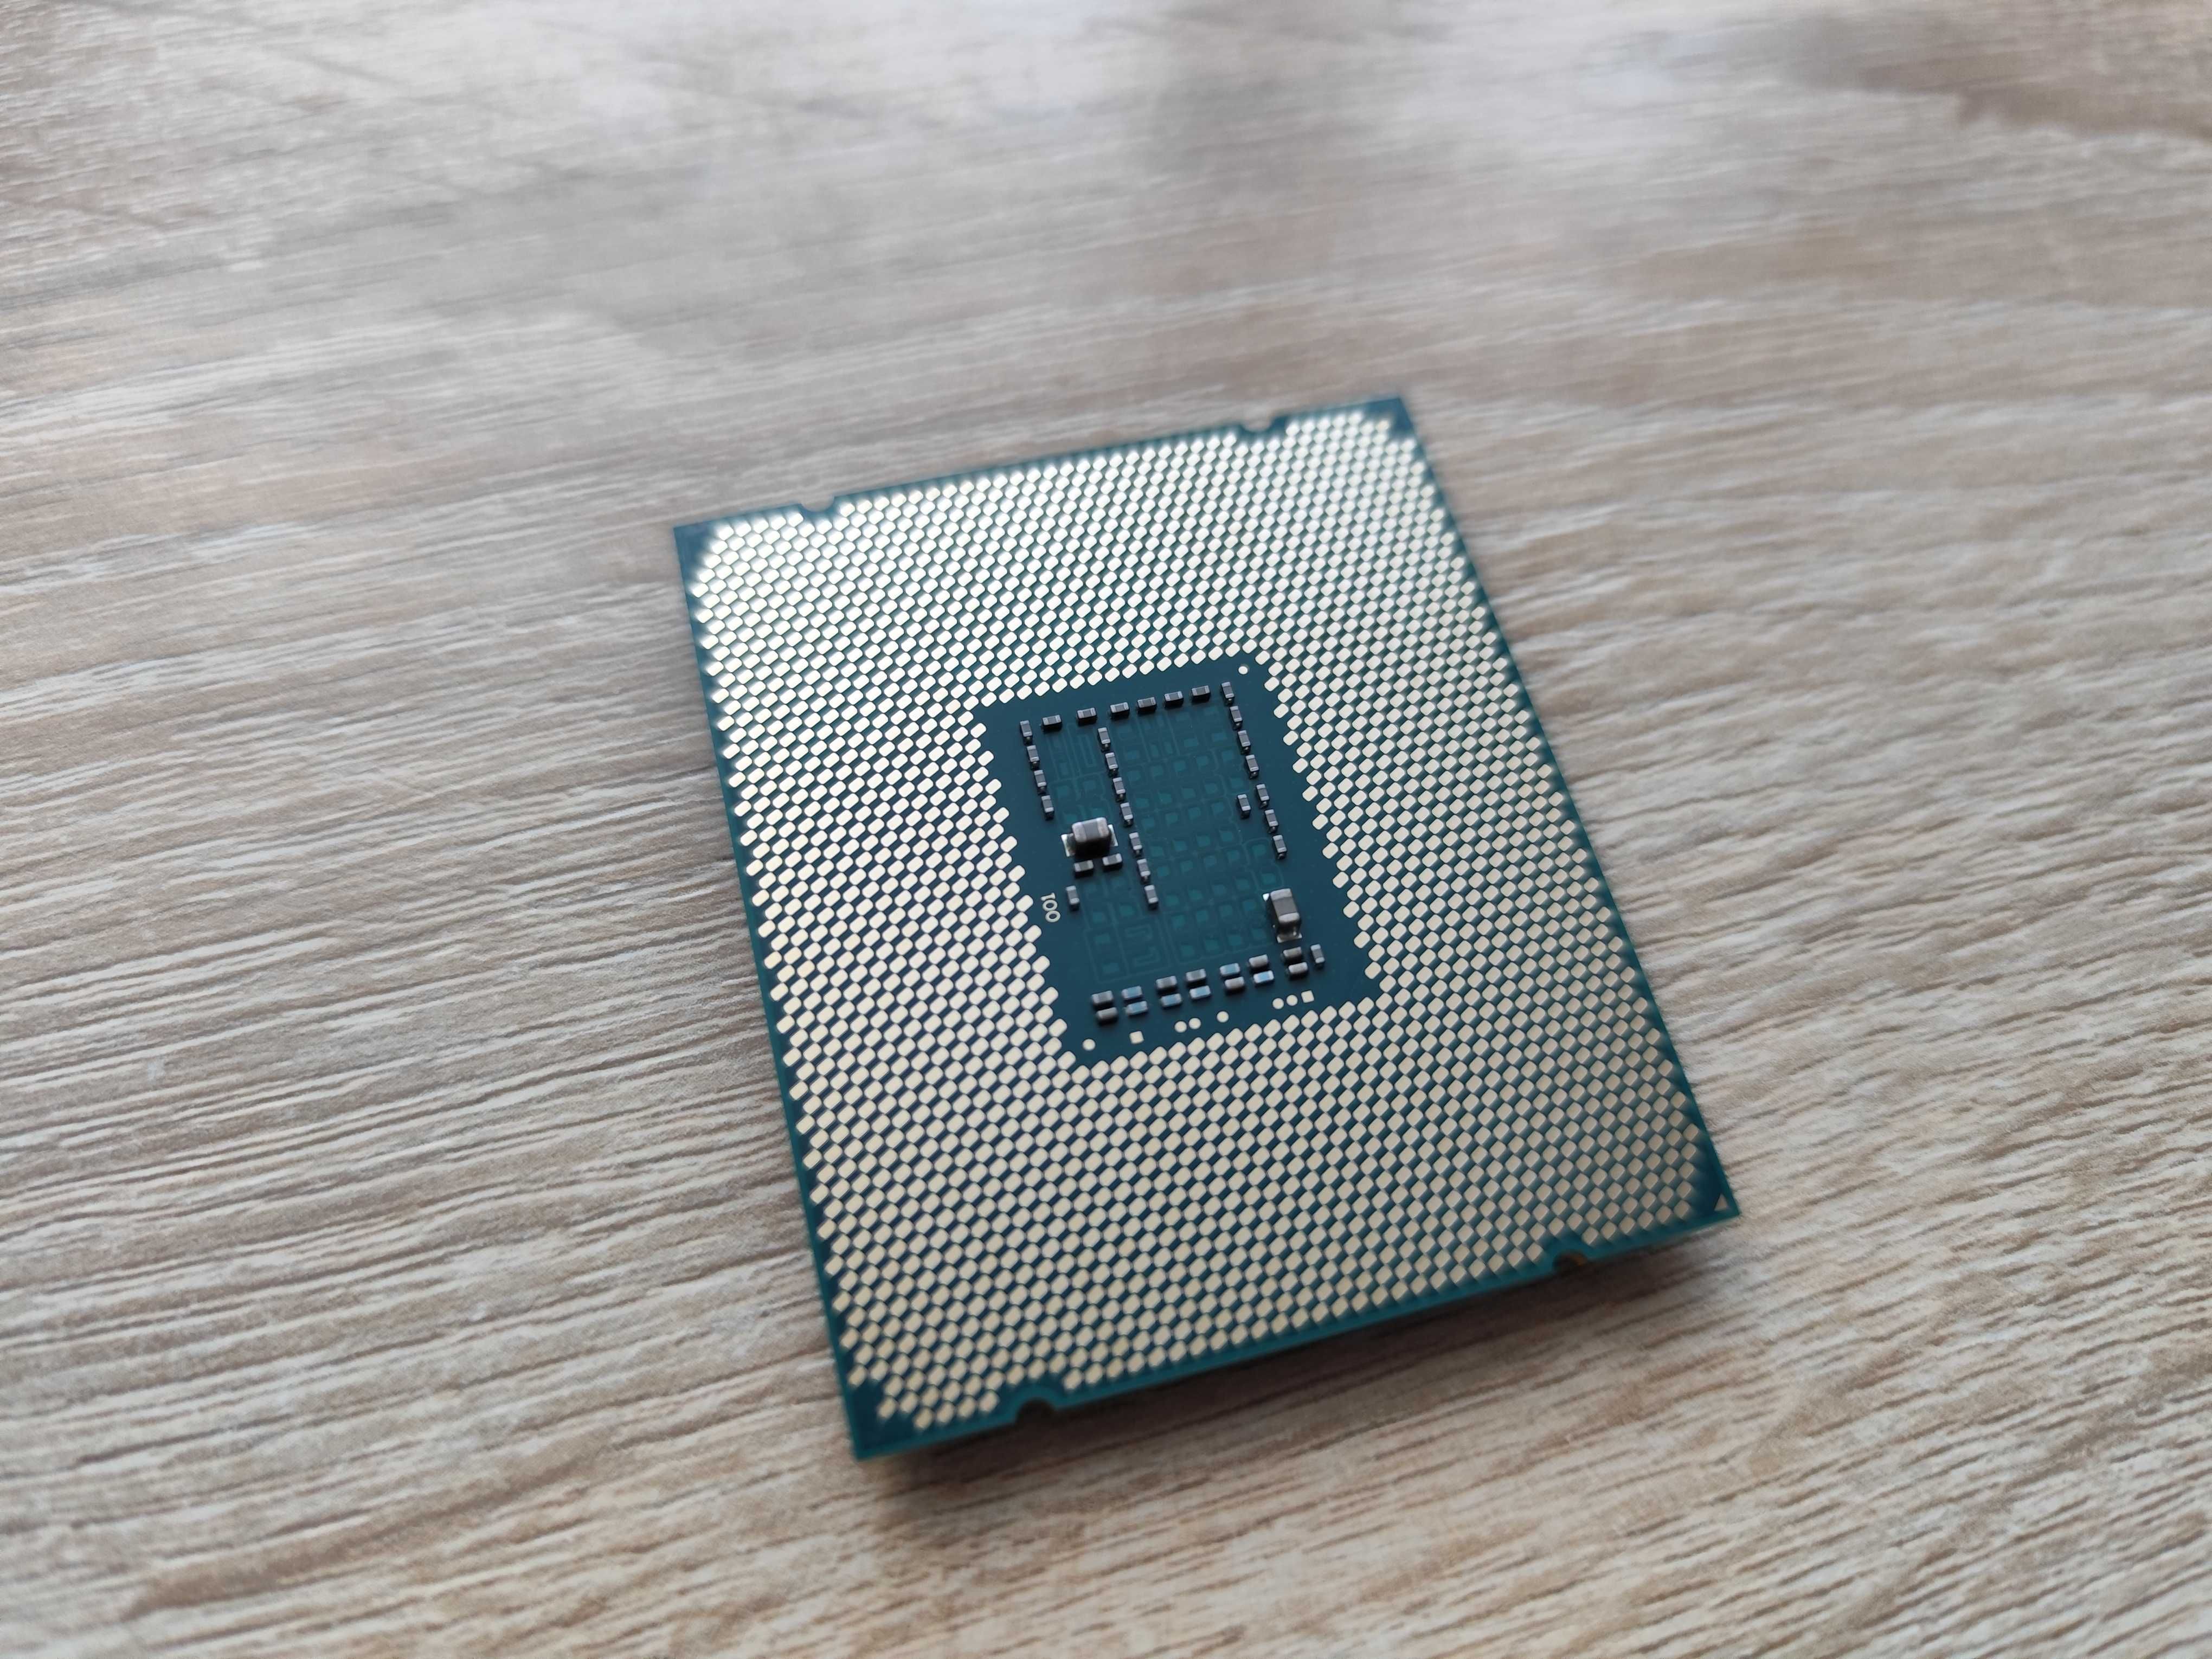 Intel Xeon E5 - 2678 v3